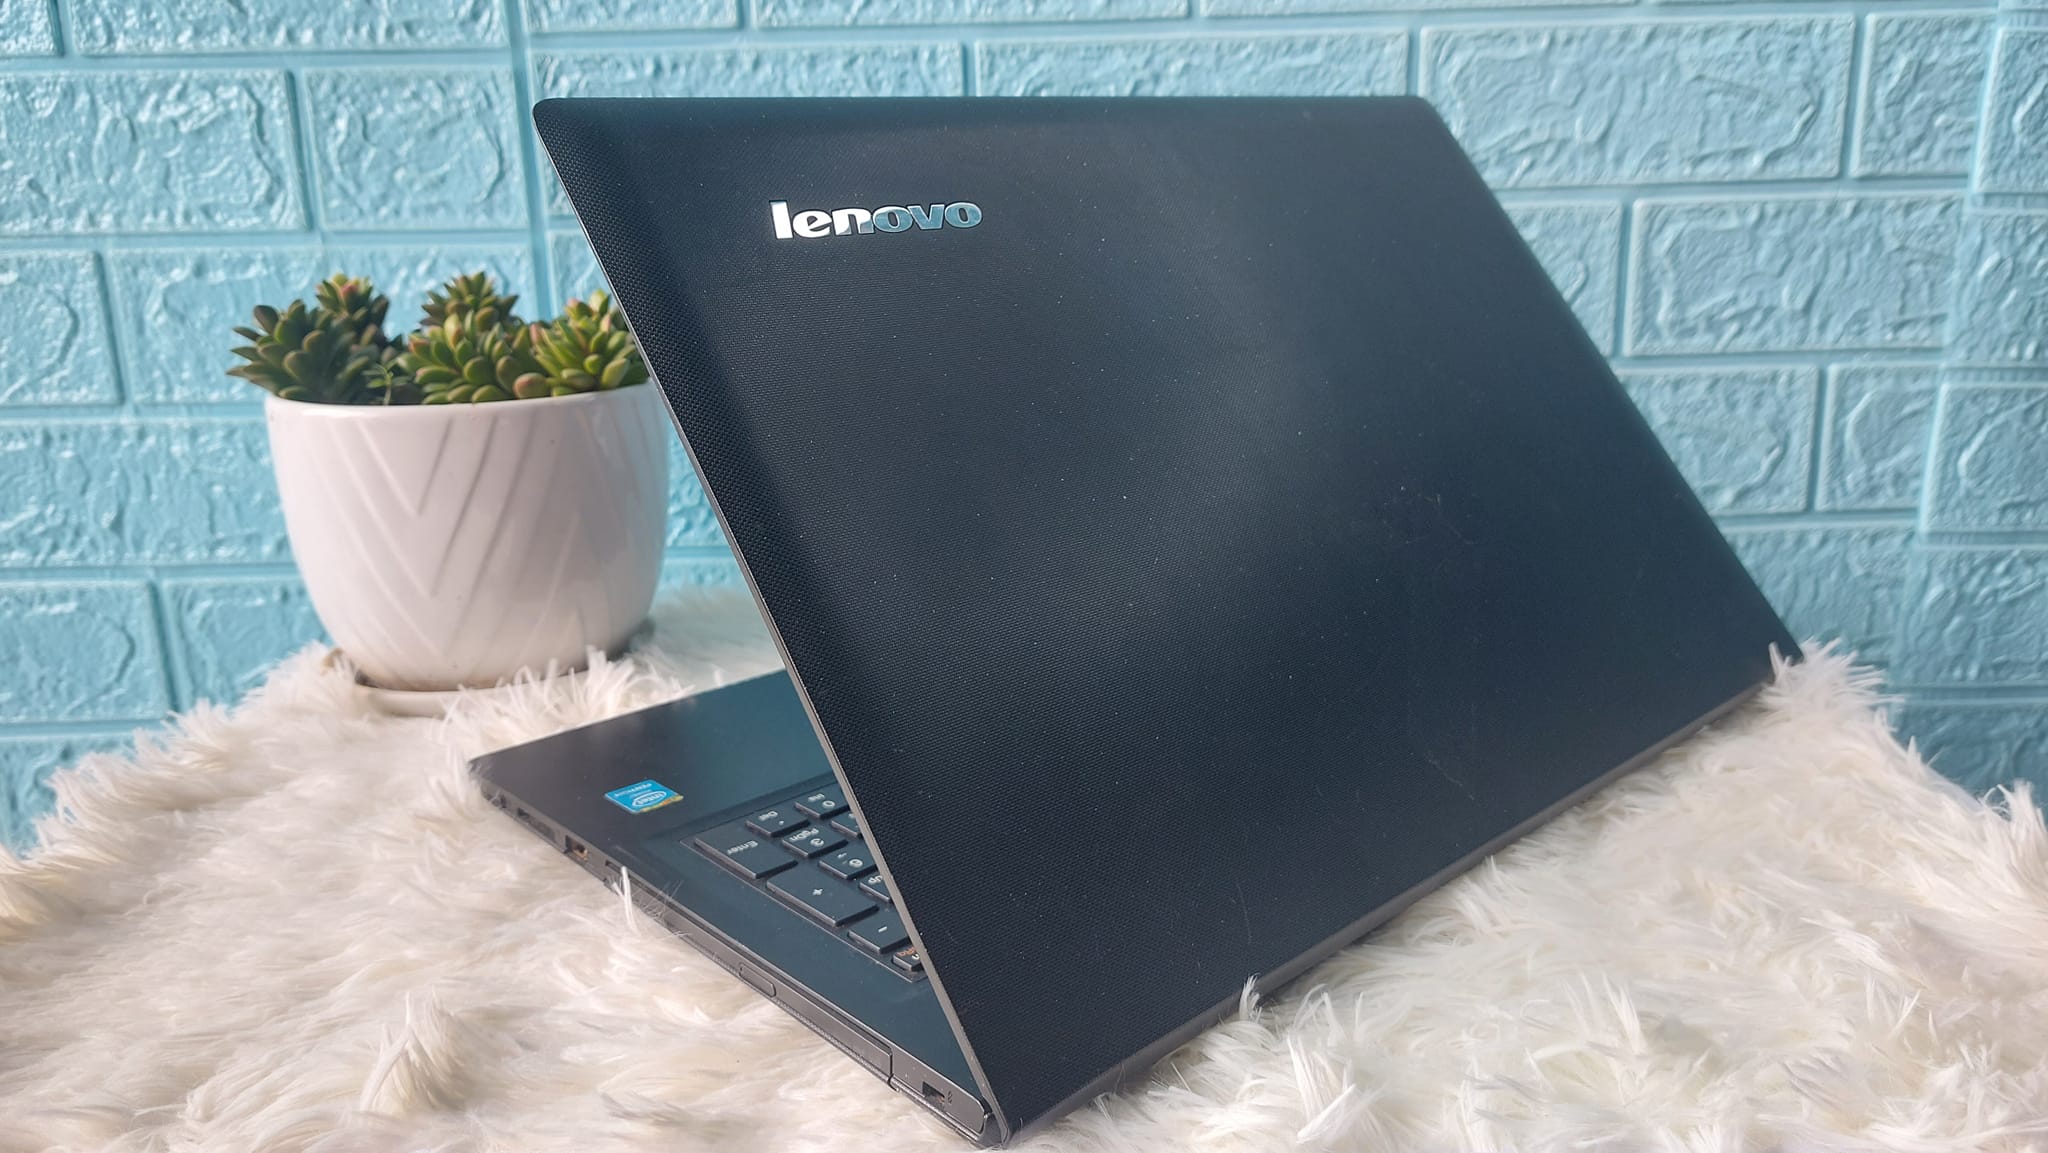 Laptop Lenovo G50 70 N3530 Ram 4gb SSD 128gb 1